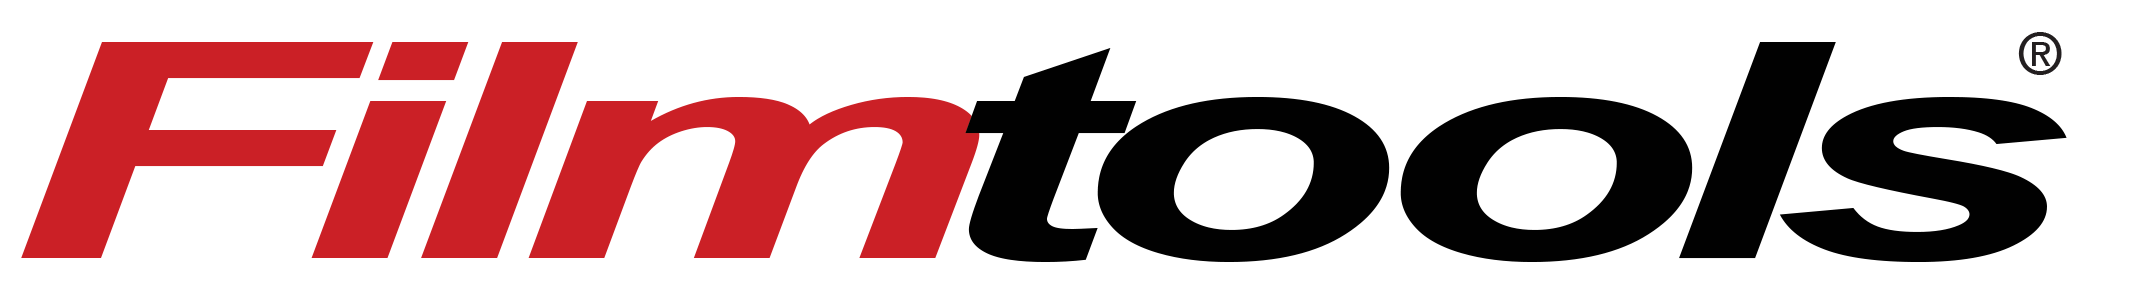 Filmtools Logo